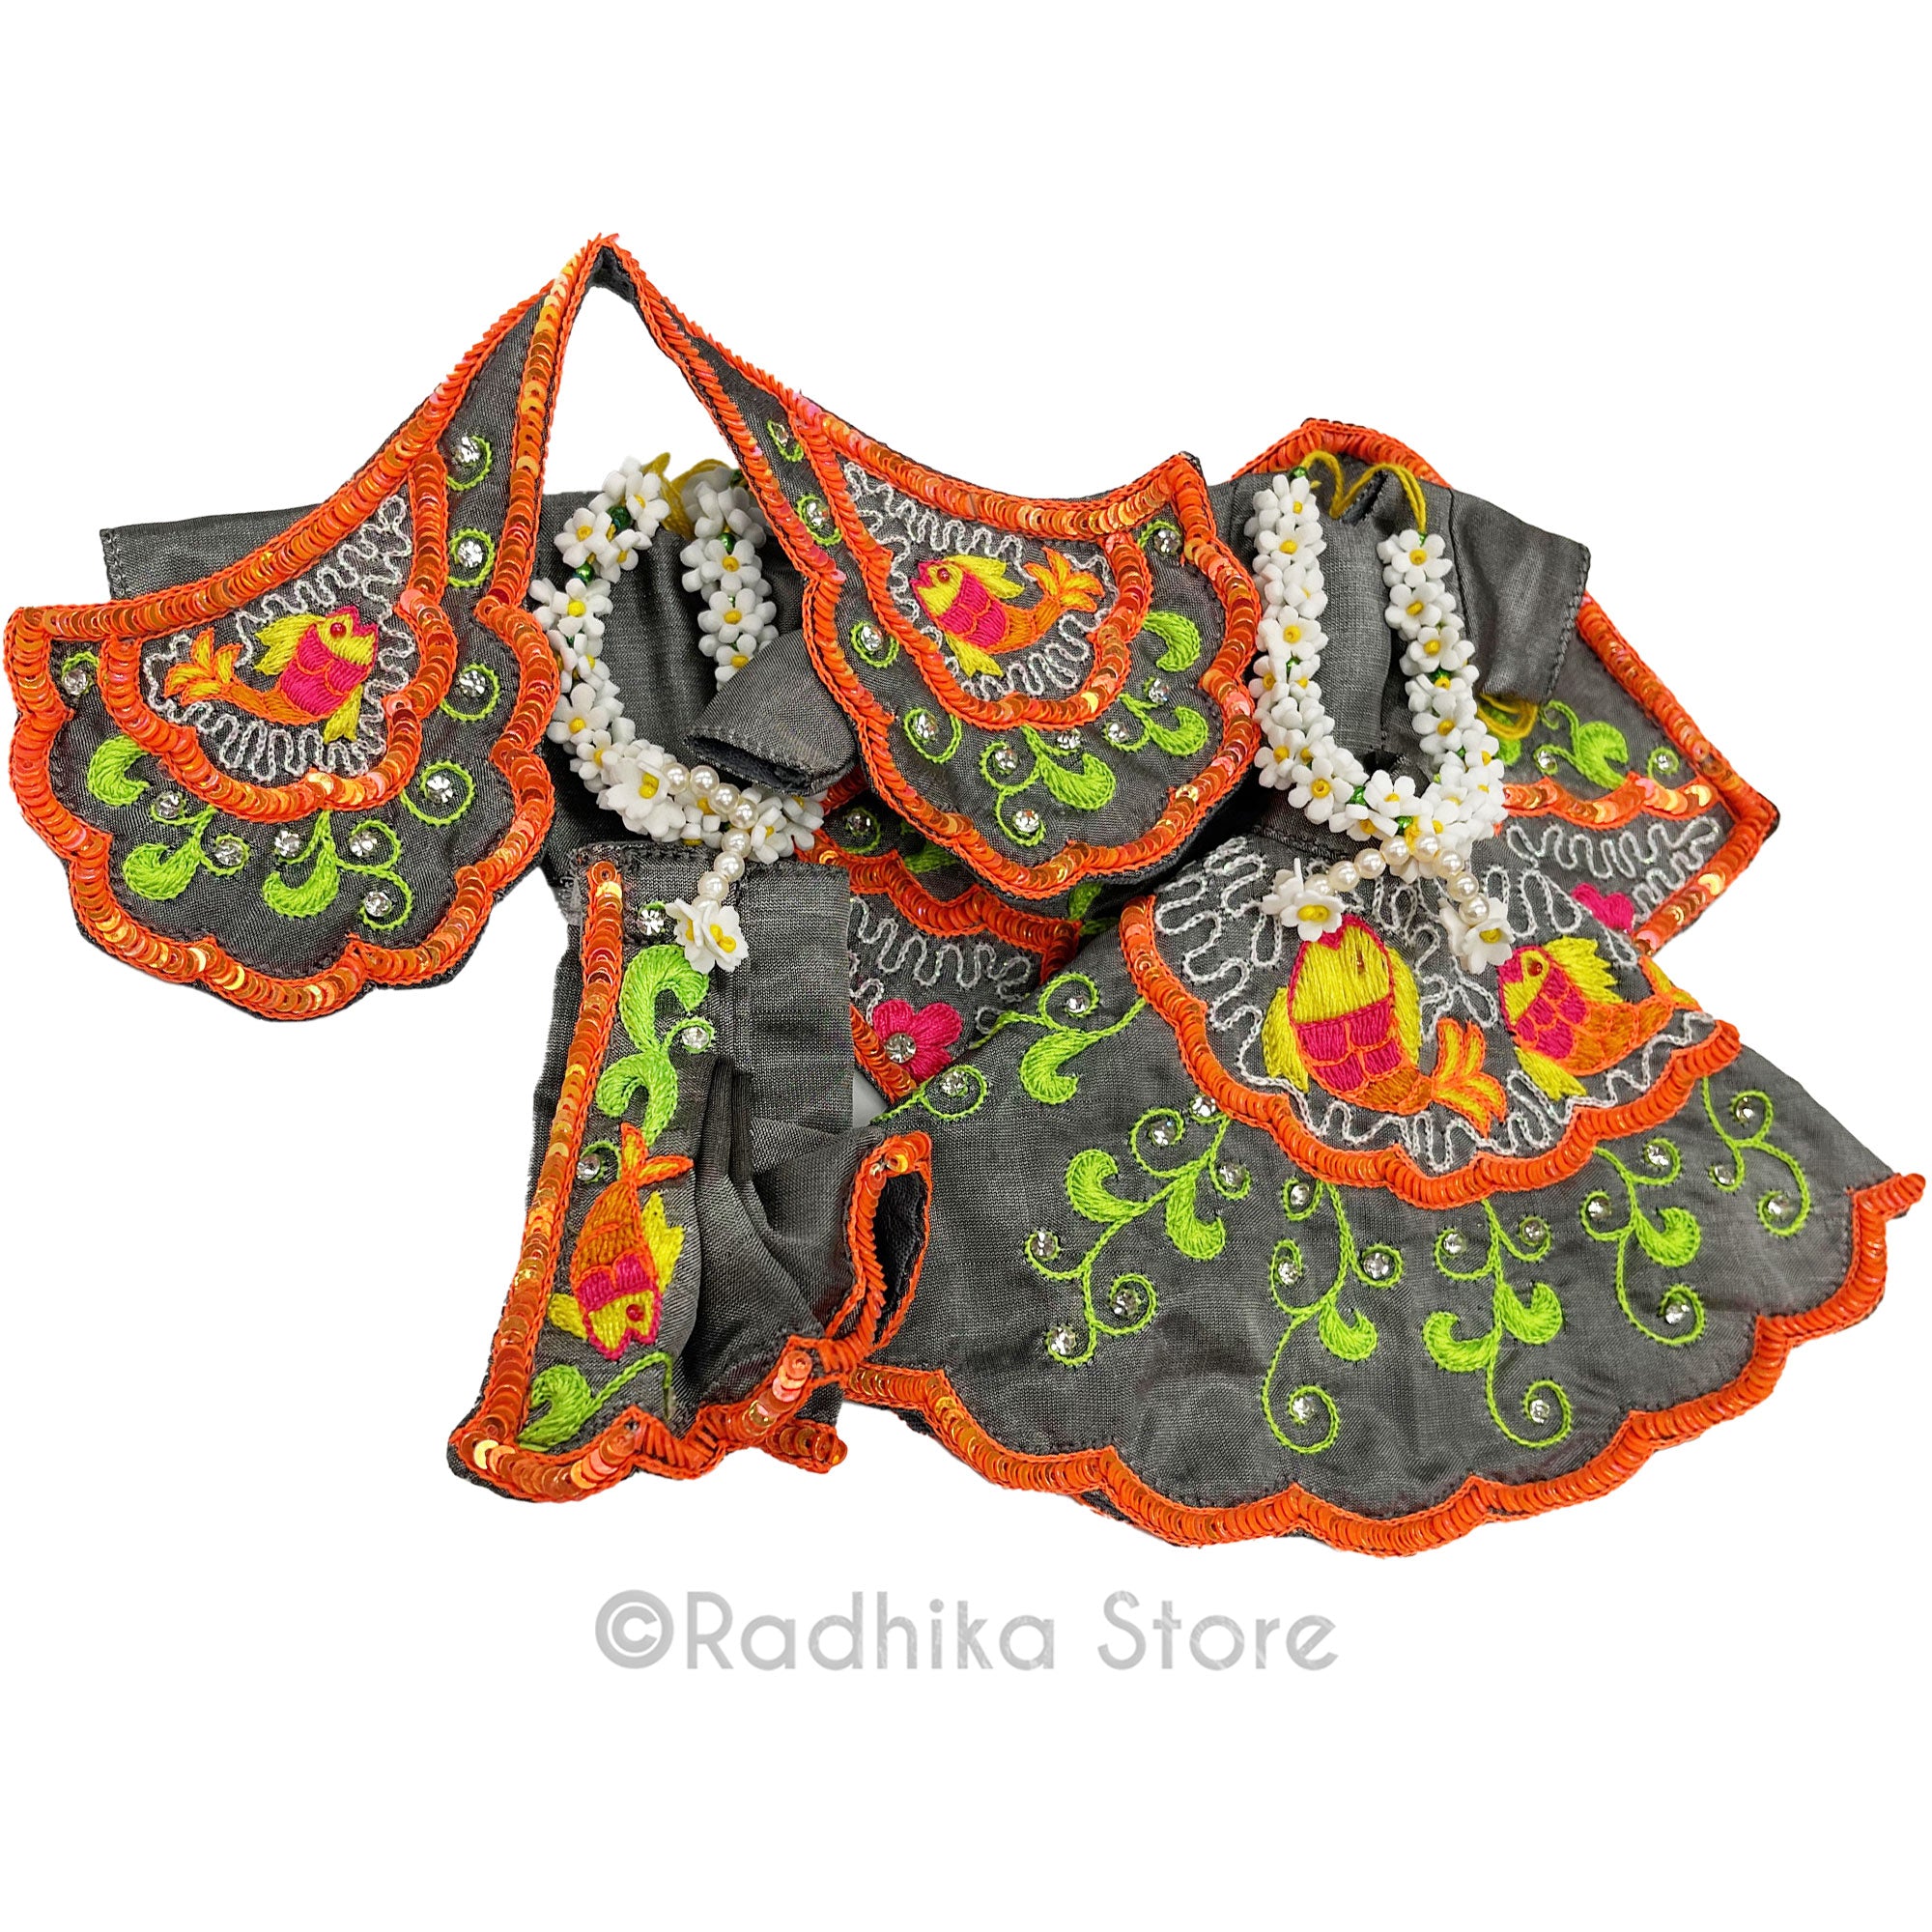 Matsya Fun Festival Silvery Gray with Bright colors - Silk - Radha Krishna Deity Outfit